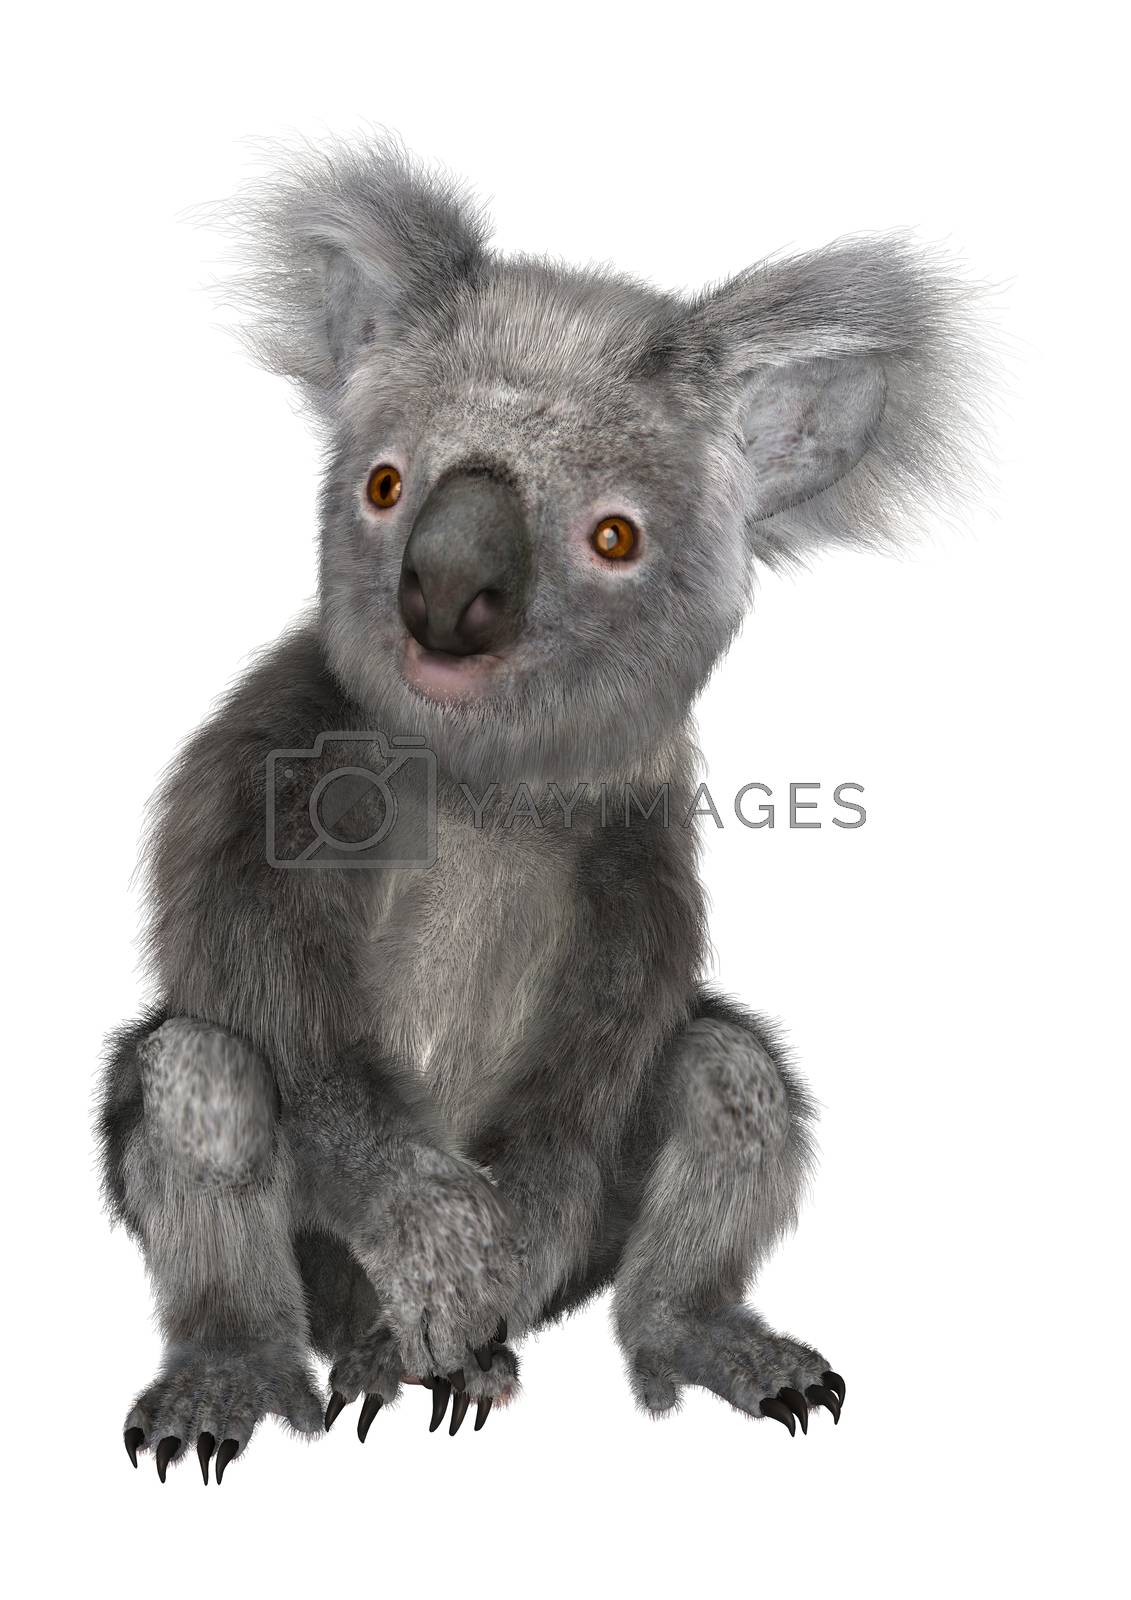 Royalty free image of Koala by Vac